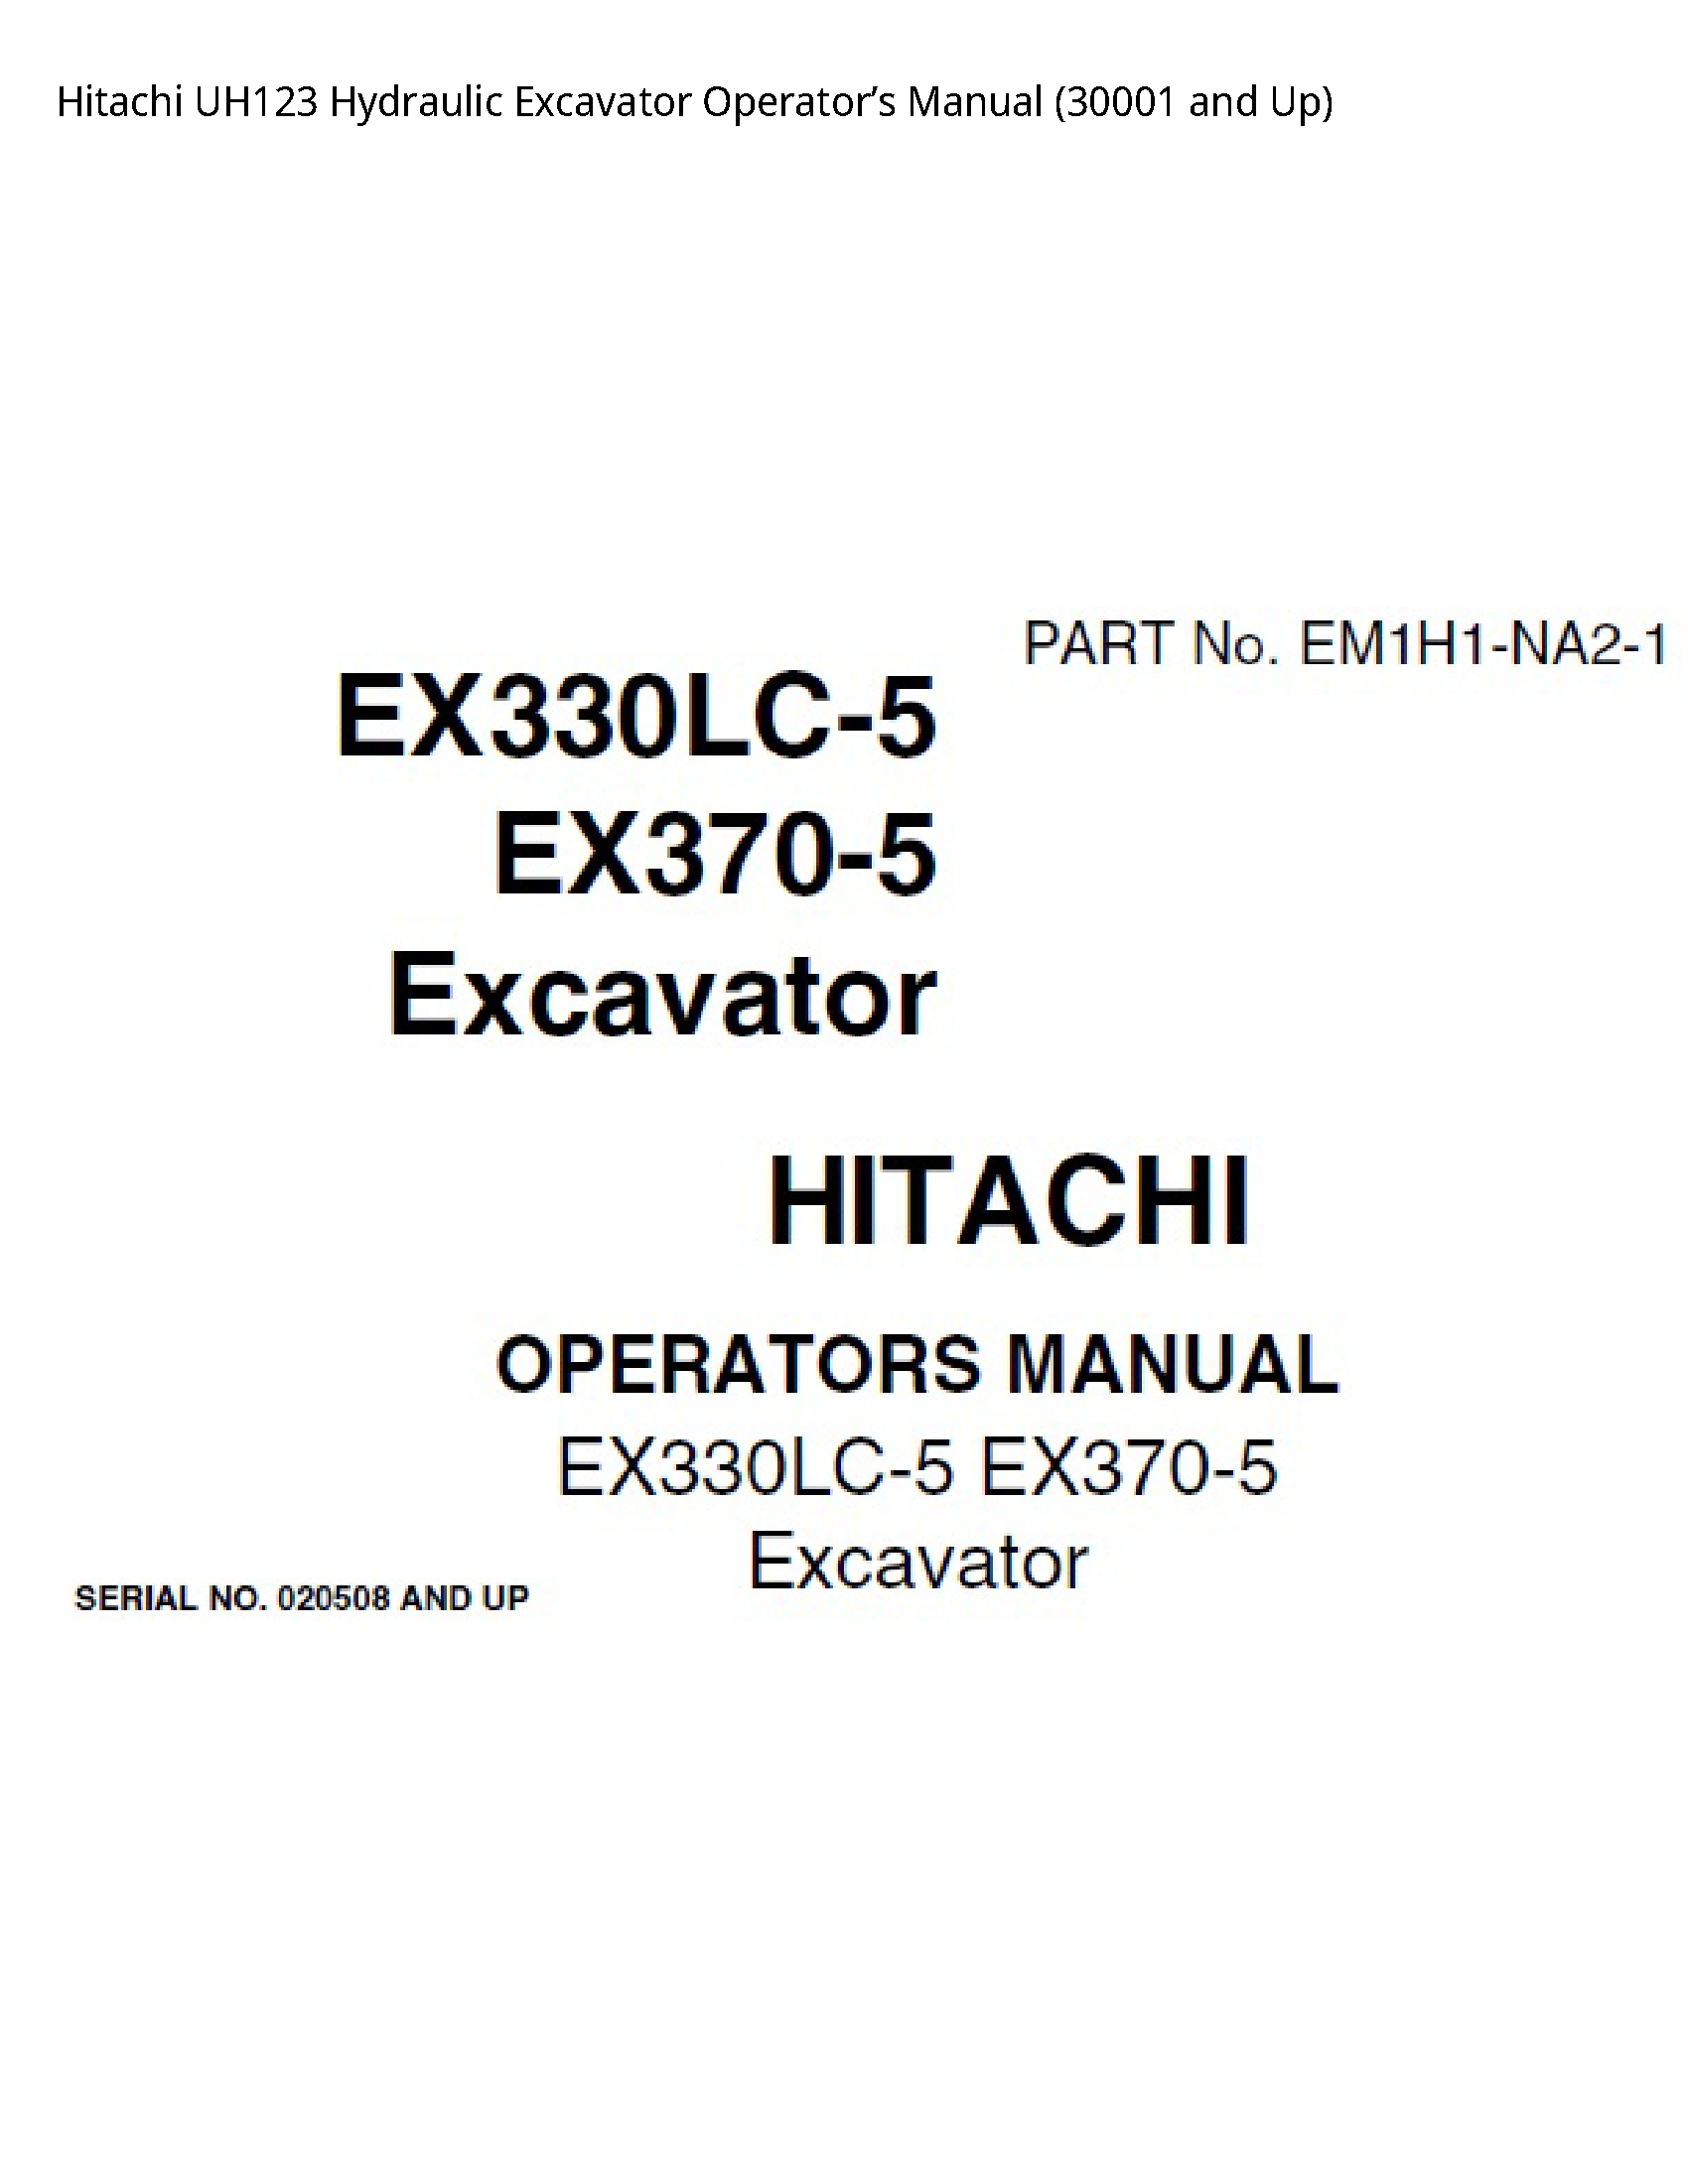 Hitachi UH123 Hydraulic Excavator Operator’s manual